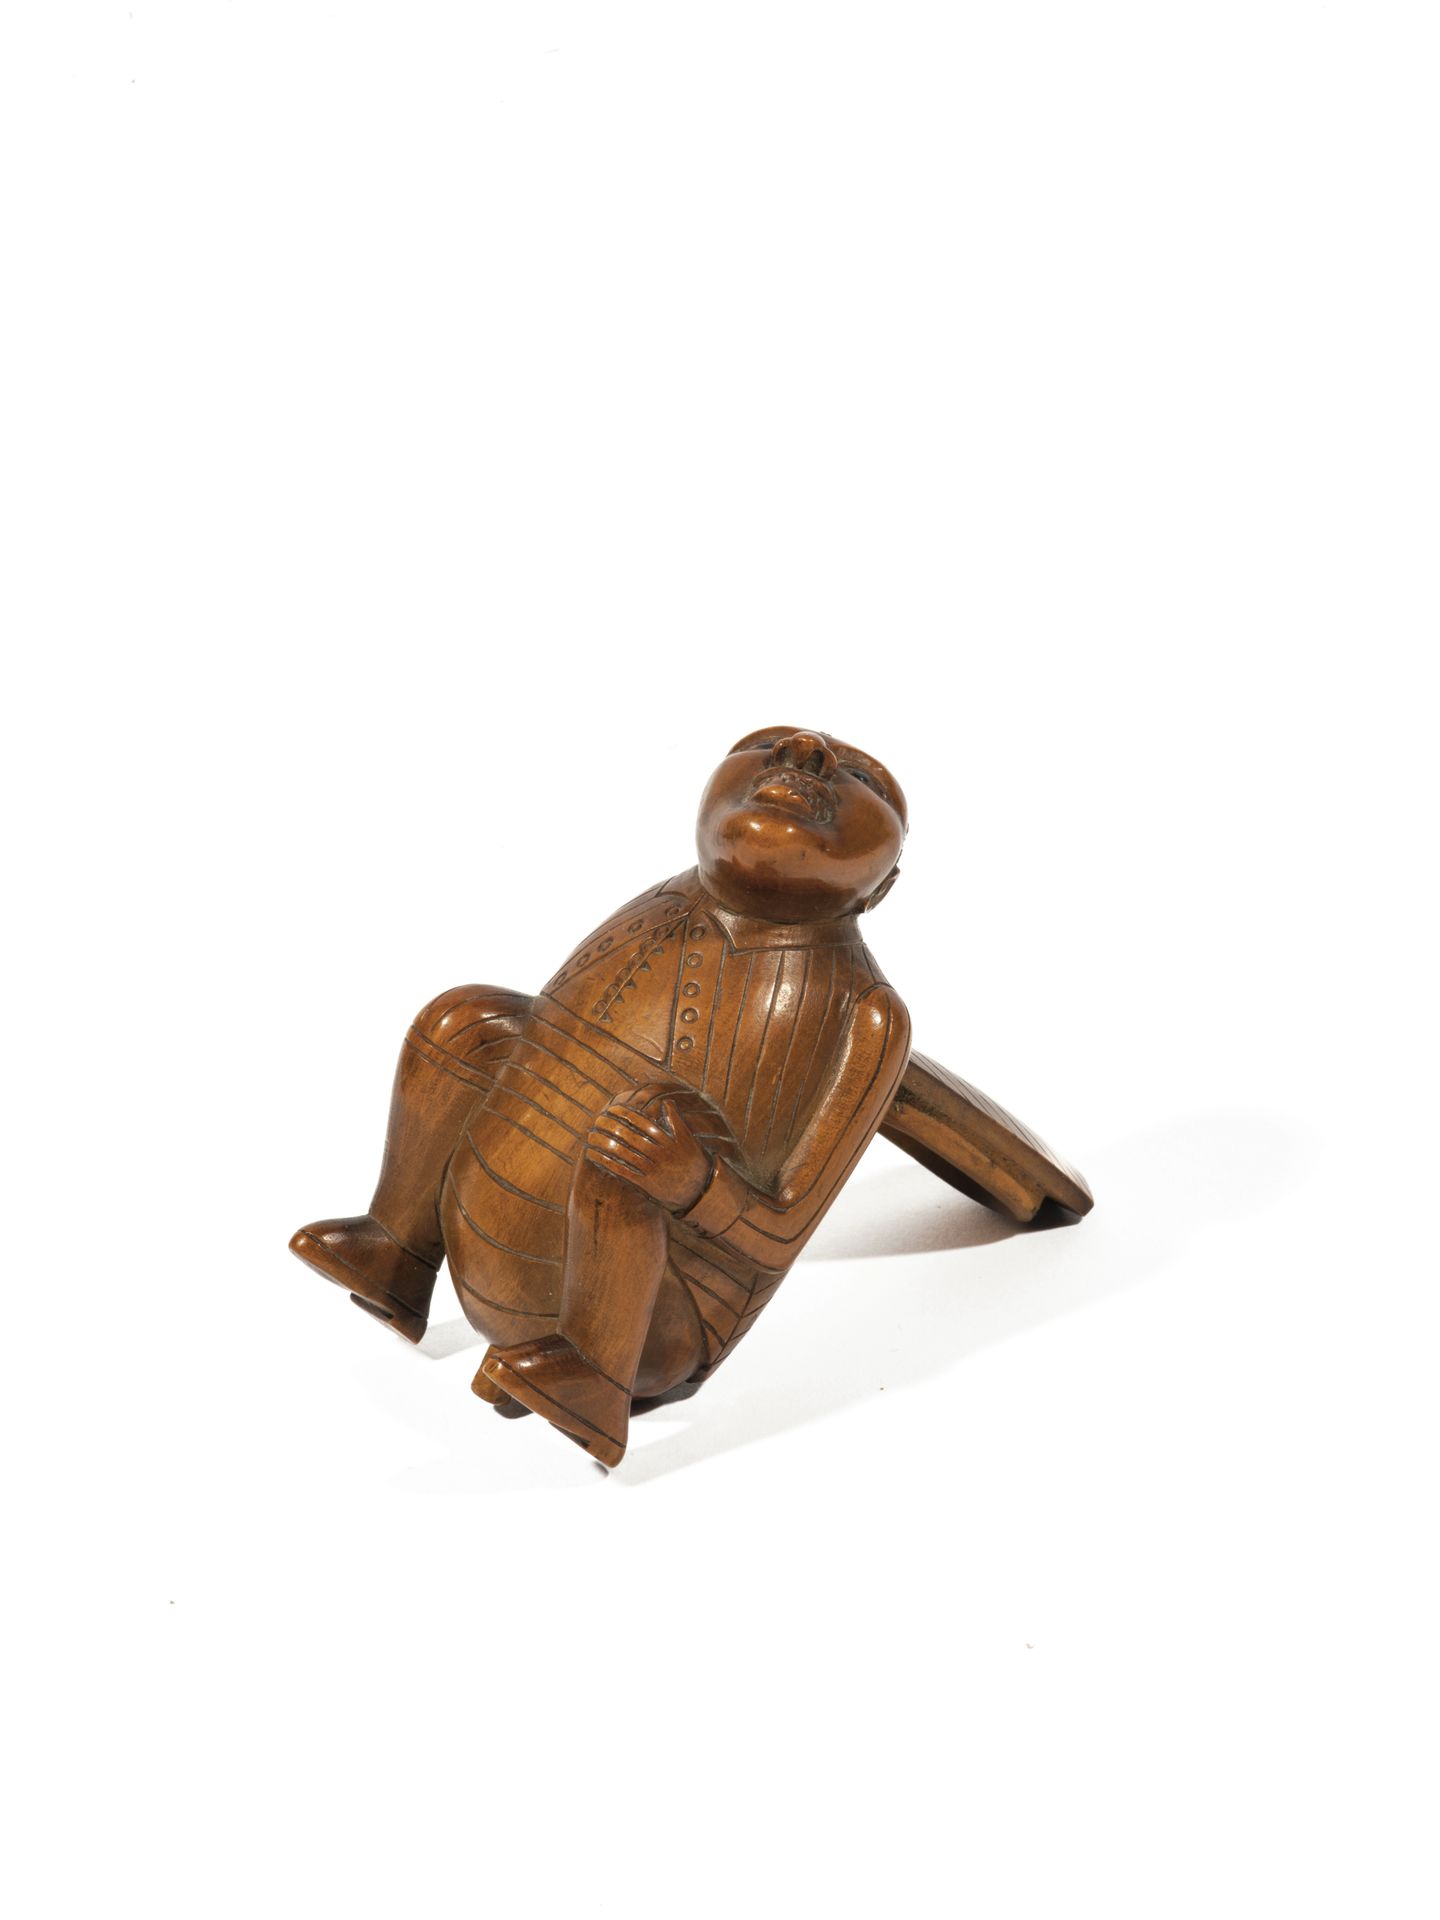 Null 雕刻的科罗索坚果鼻烟盒表现了一个蹲着的怪人在解手。
后面有铰链开口。
19世纪的作品。 
高度：7,8厘米。